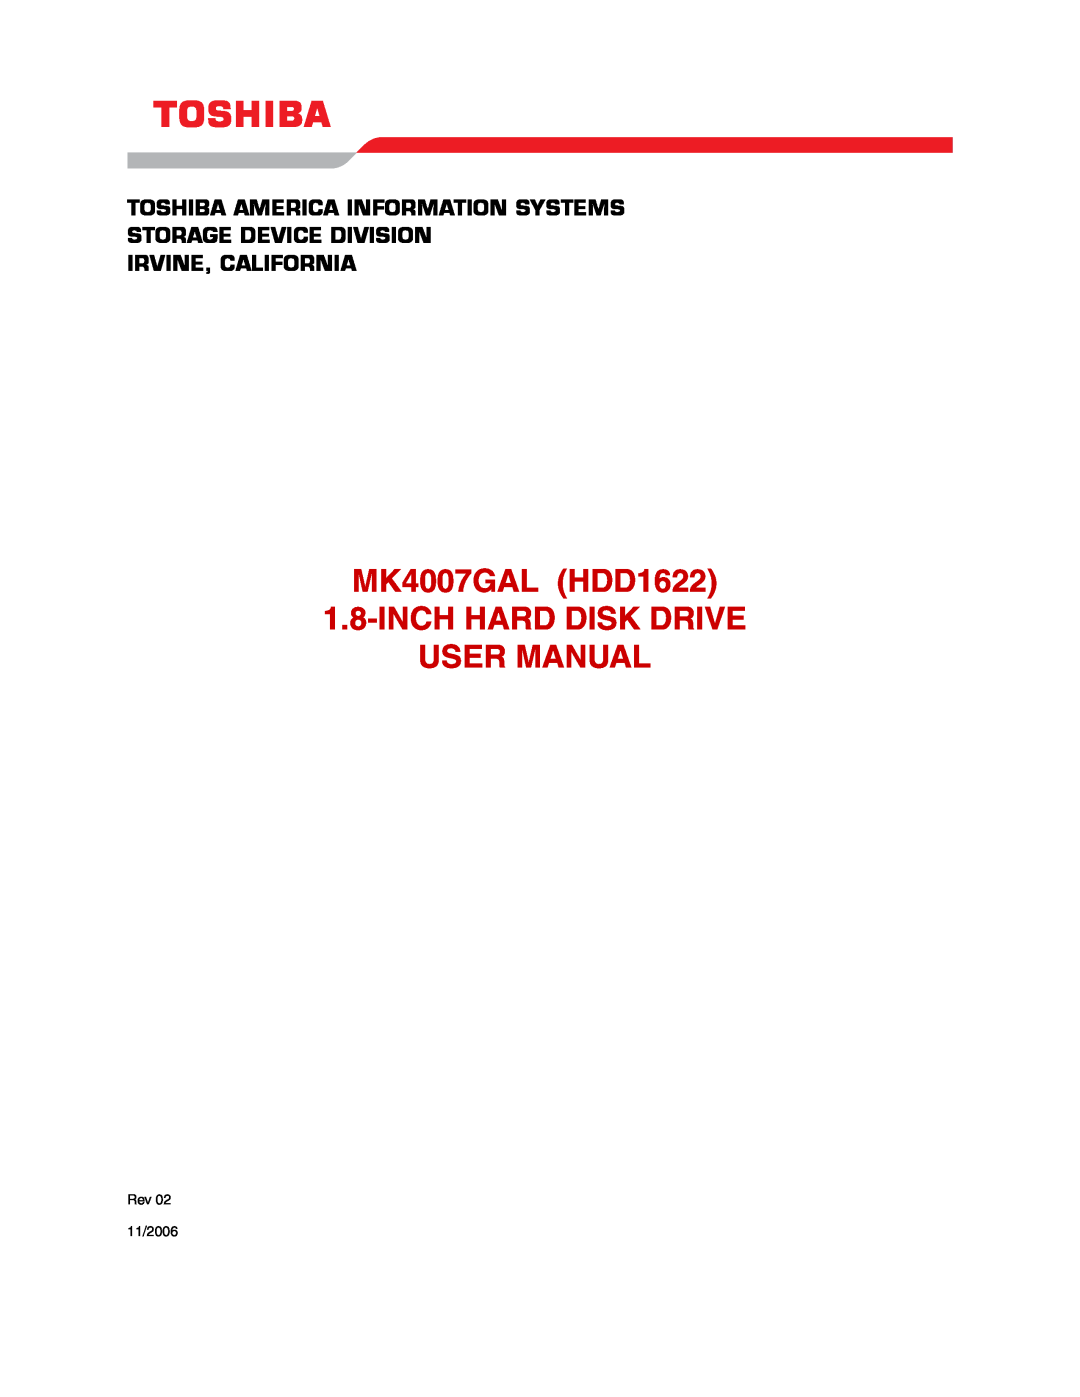 Toshiba MK4007GAL user manual Toshiba America Information Systems Storage Device Division, Irvine, California, Rev 11/2006 